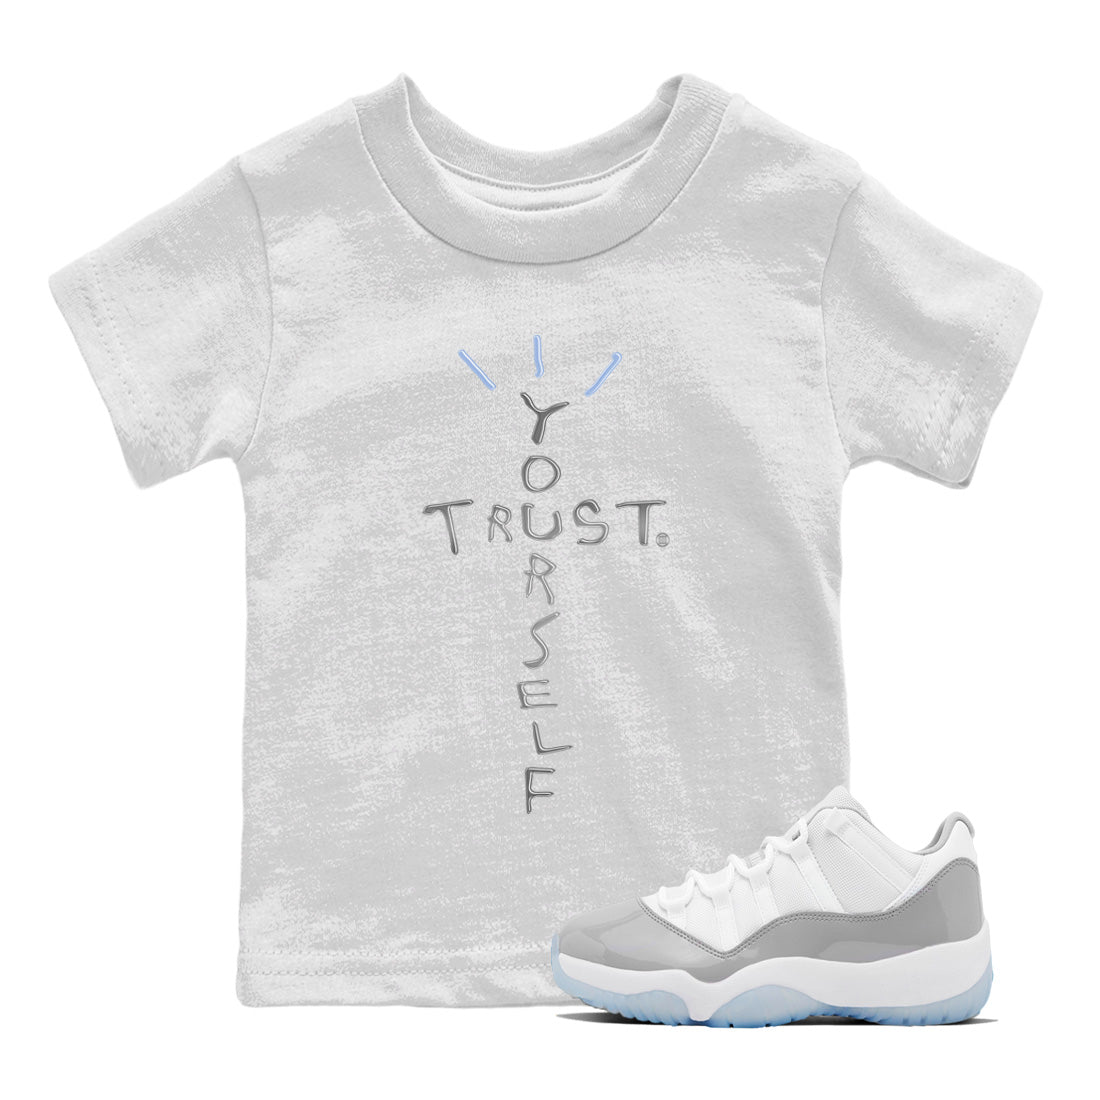 Air Jordan 11 White Cement Sneaker Match Tees Trust Yourself Streetwear Sneaker Shirt Air Jordan 11 Cement Grey Sneaker Release Tees Kids Shirts White 1